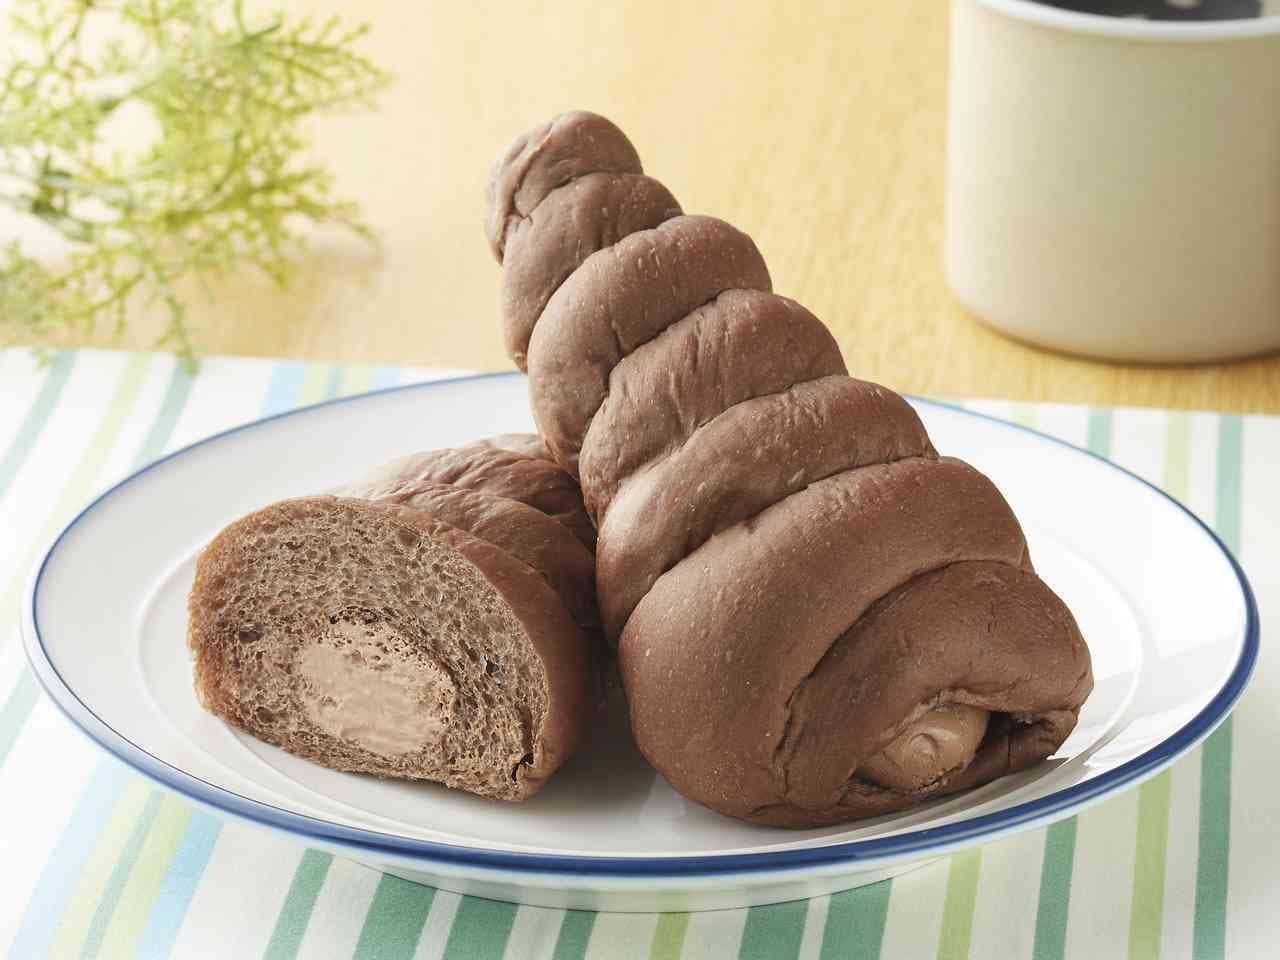 Ministop "Bread like soft serve ice cream with Belgian chocolate"